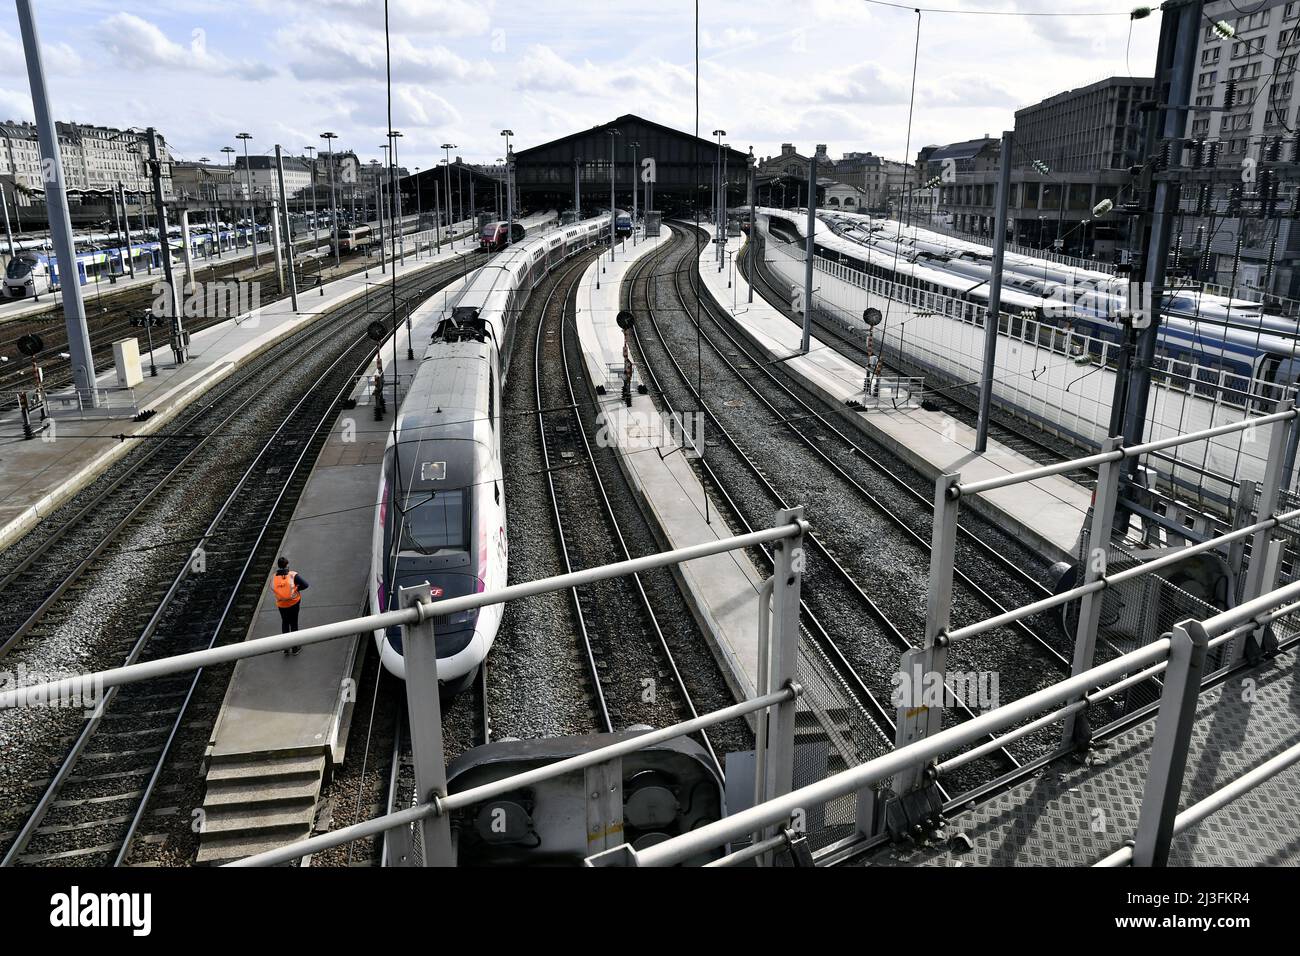 Trains in Gare du Nord - Paris - France Stock Photo